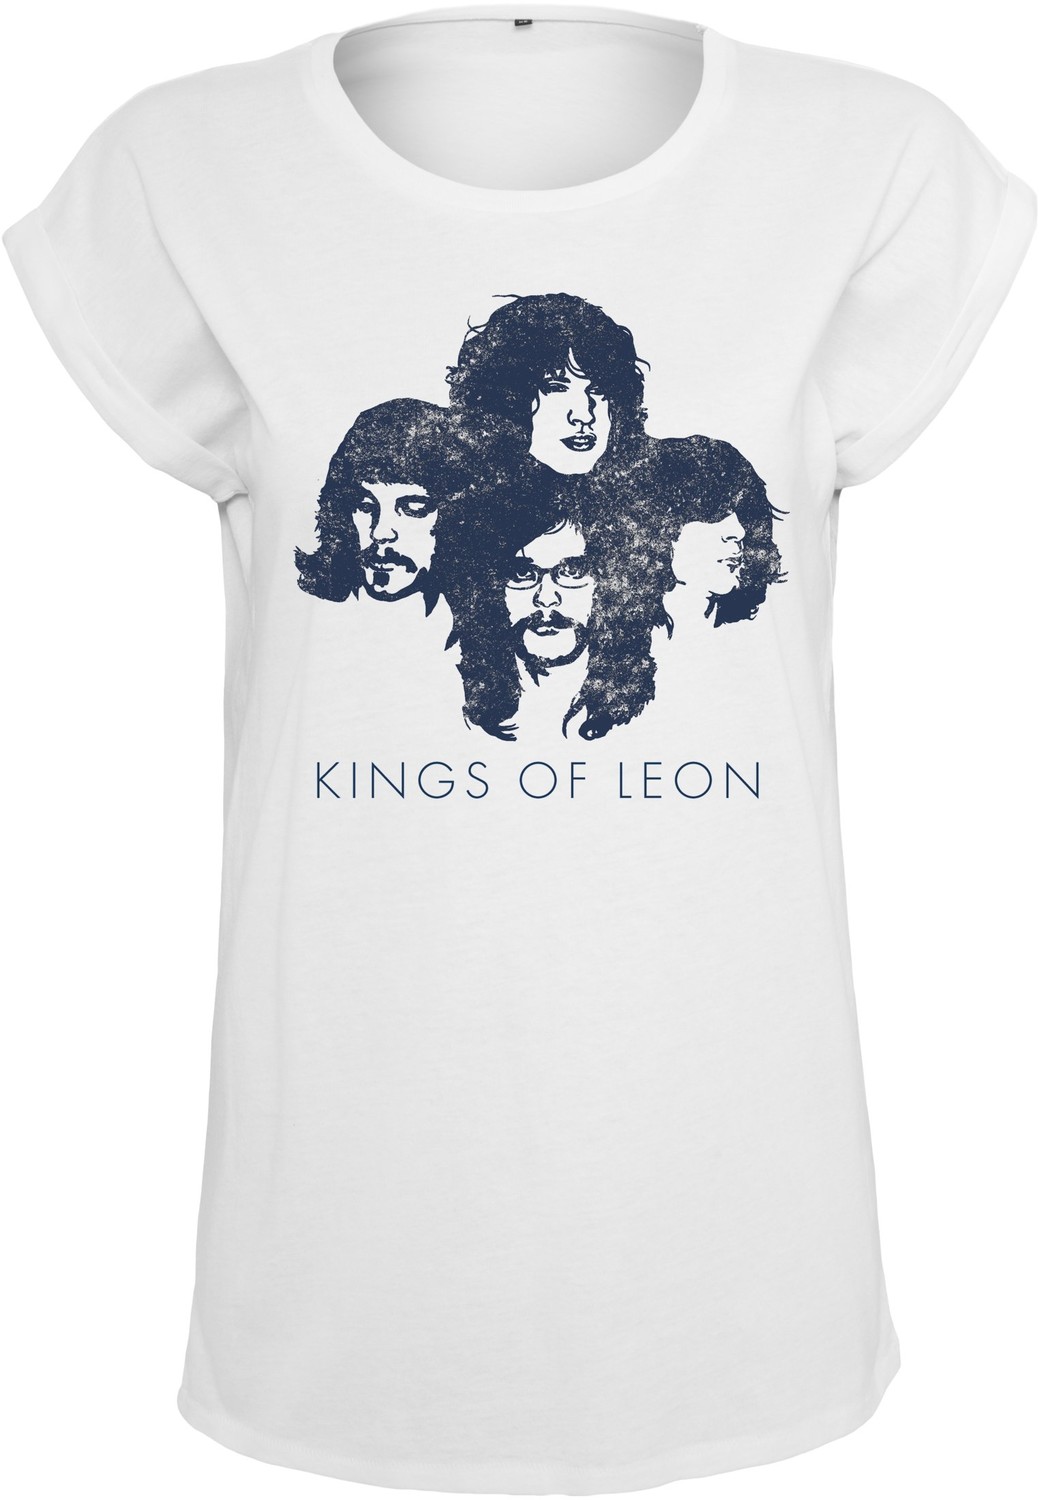 Dámské tričko Kings of Leon Silhouette bílé